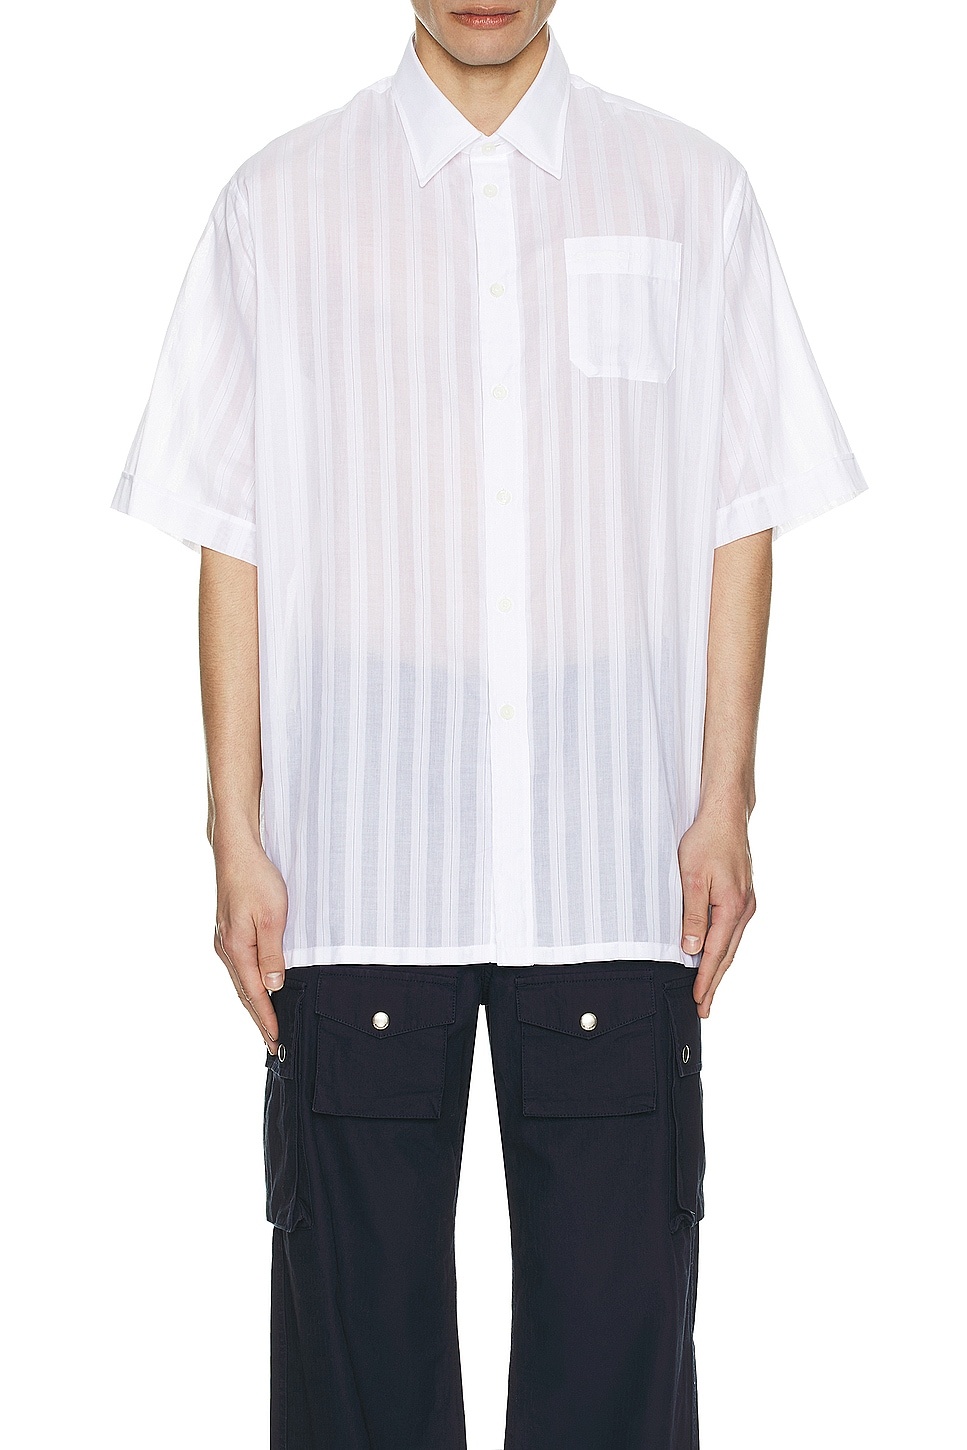 Short Sleeve Shirt With Pocket - 4